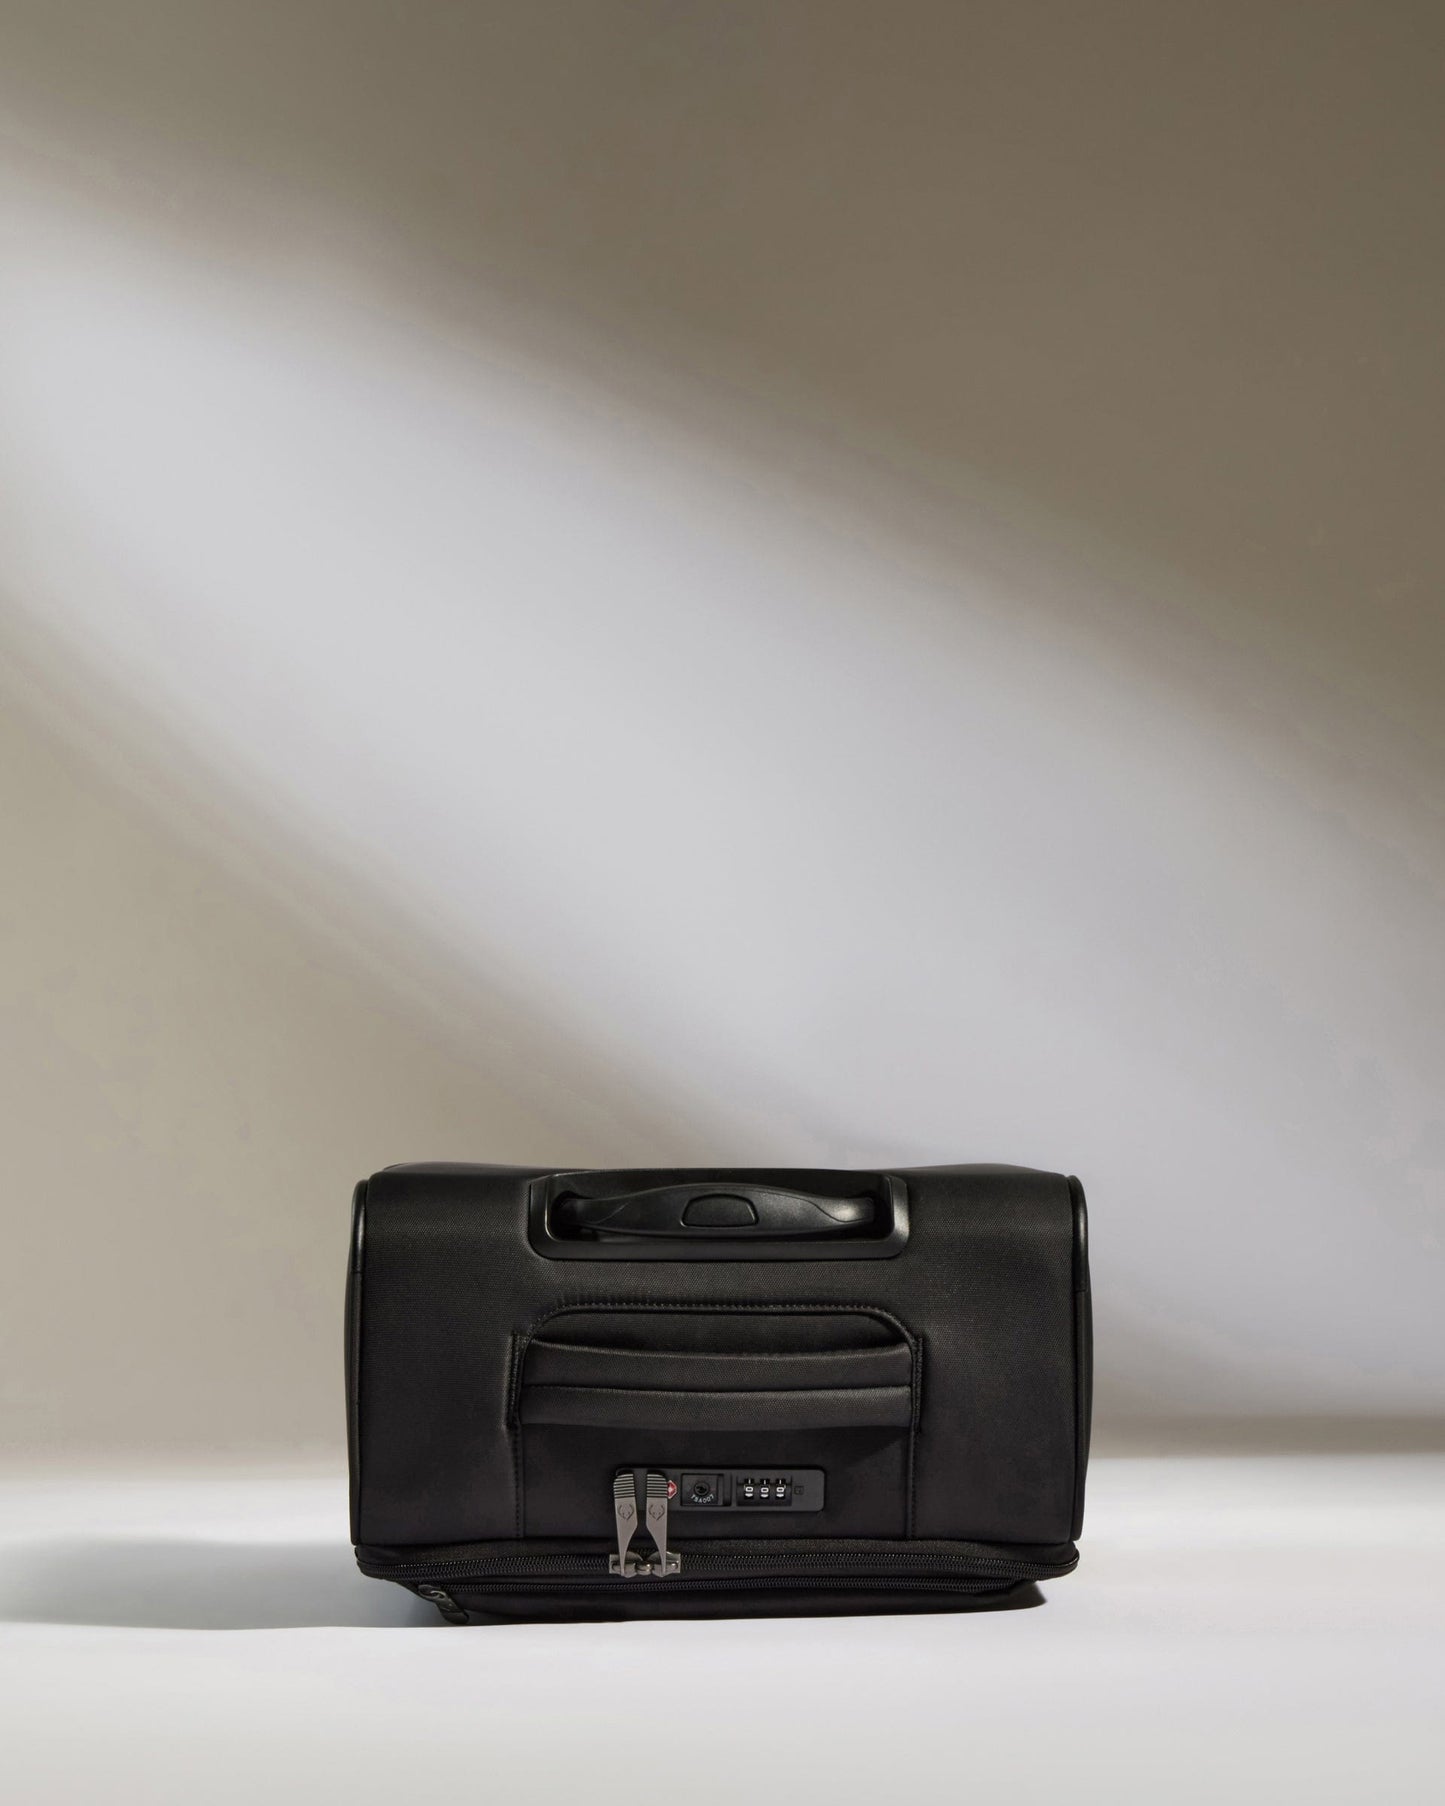 Antler Luggage -  Soft Stripe Cabin in Black - Soft Suitcase Soft Stripe Cabin in Black | Soft Suitcase | Cabin Bag